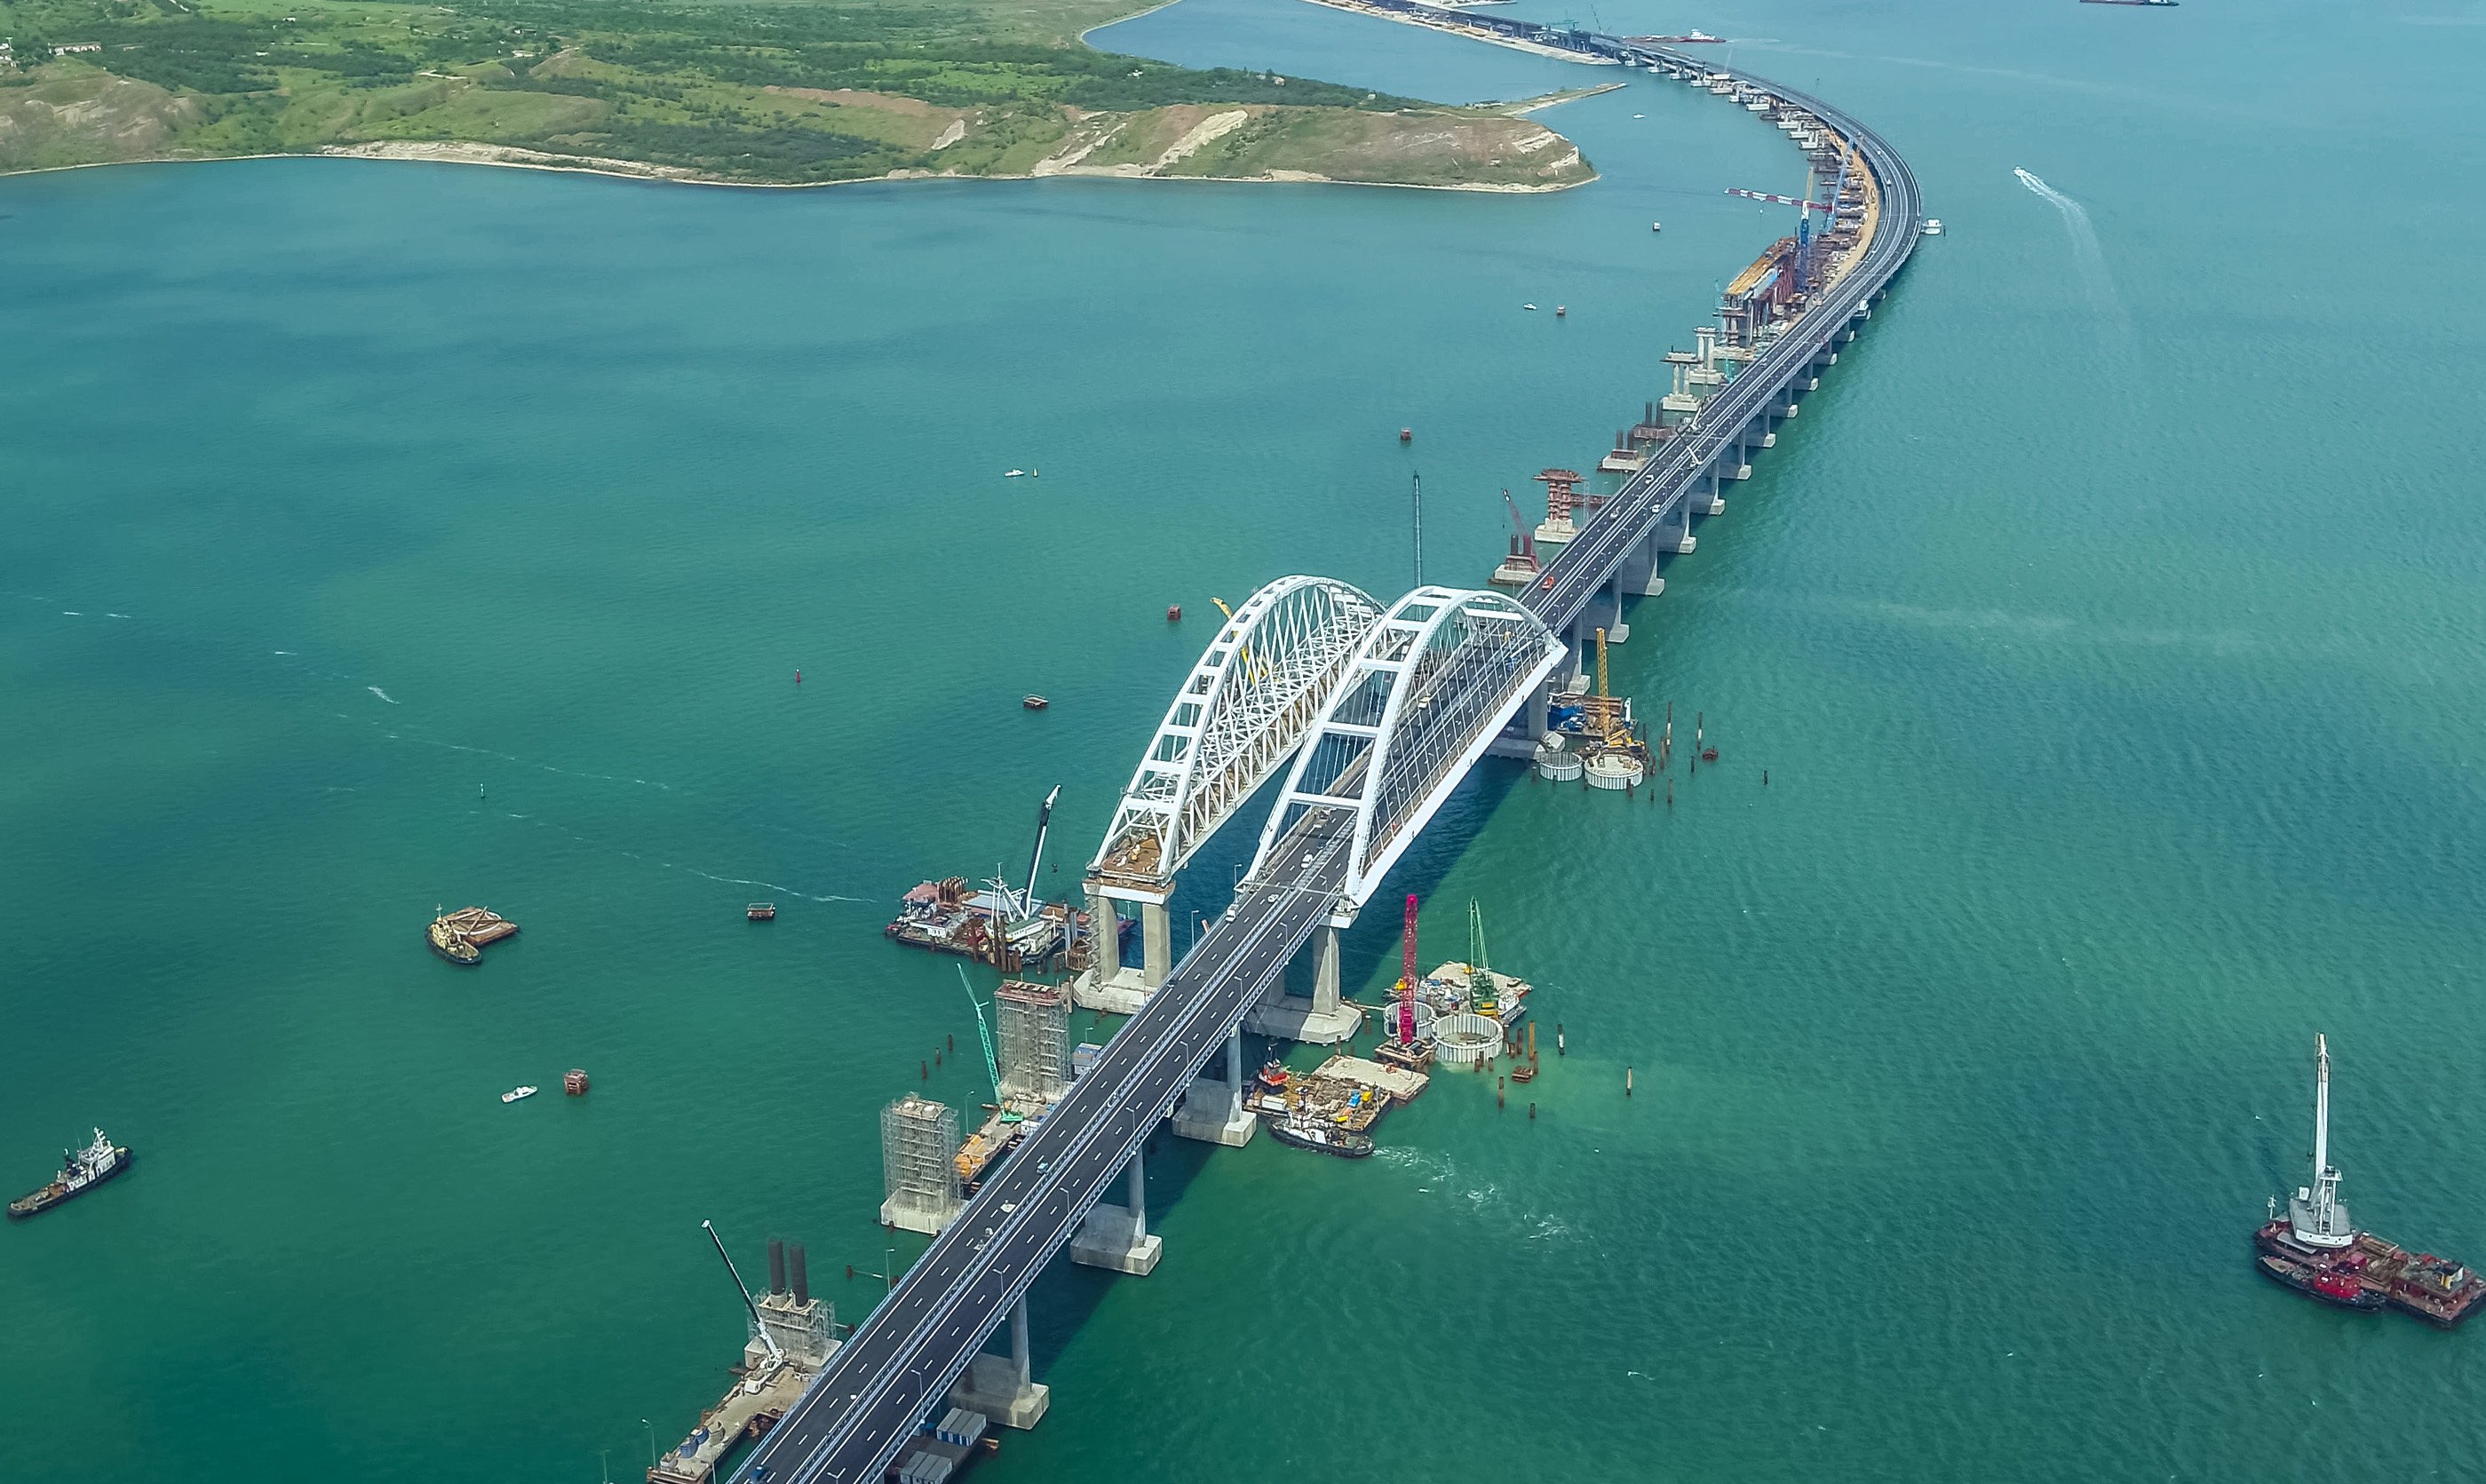 Крымский мост презентация